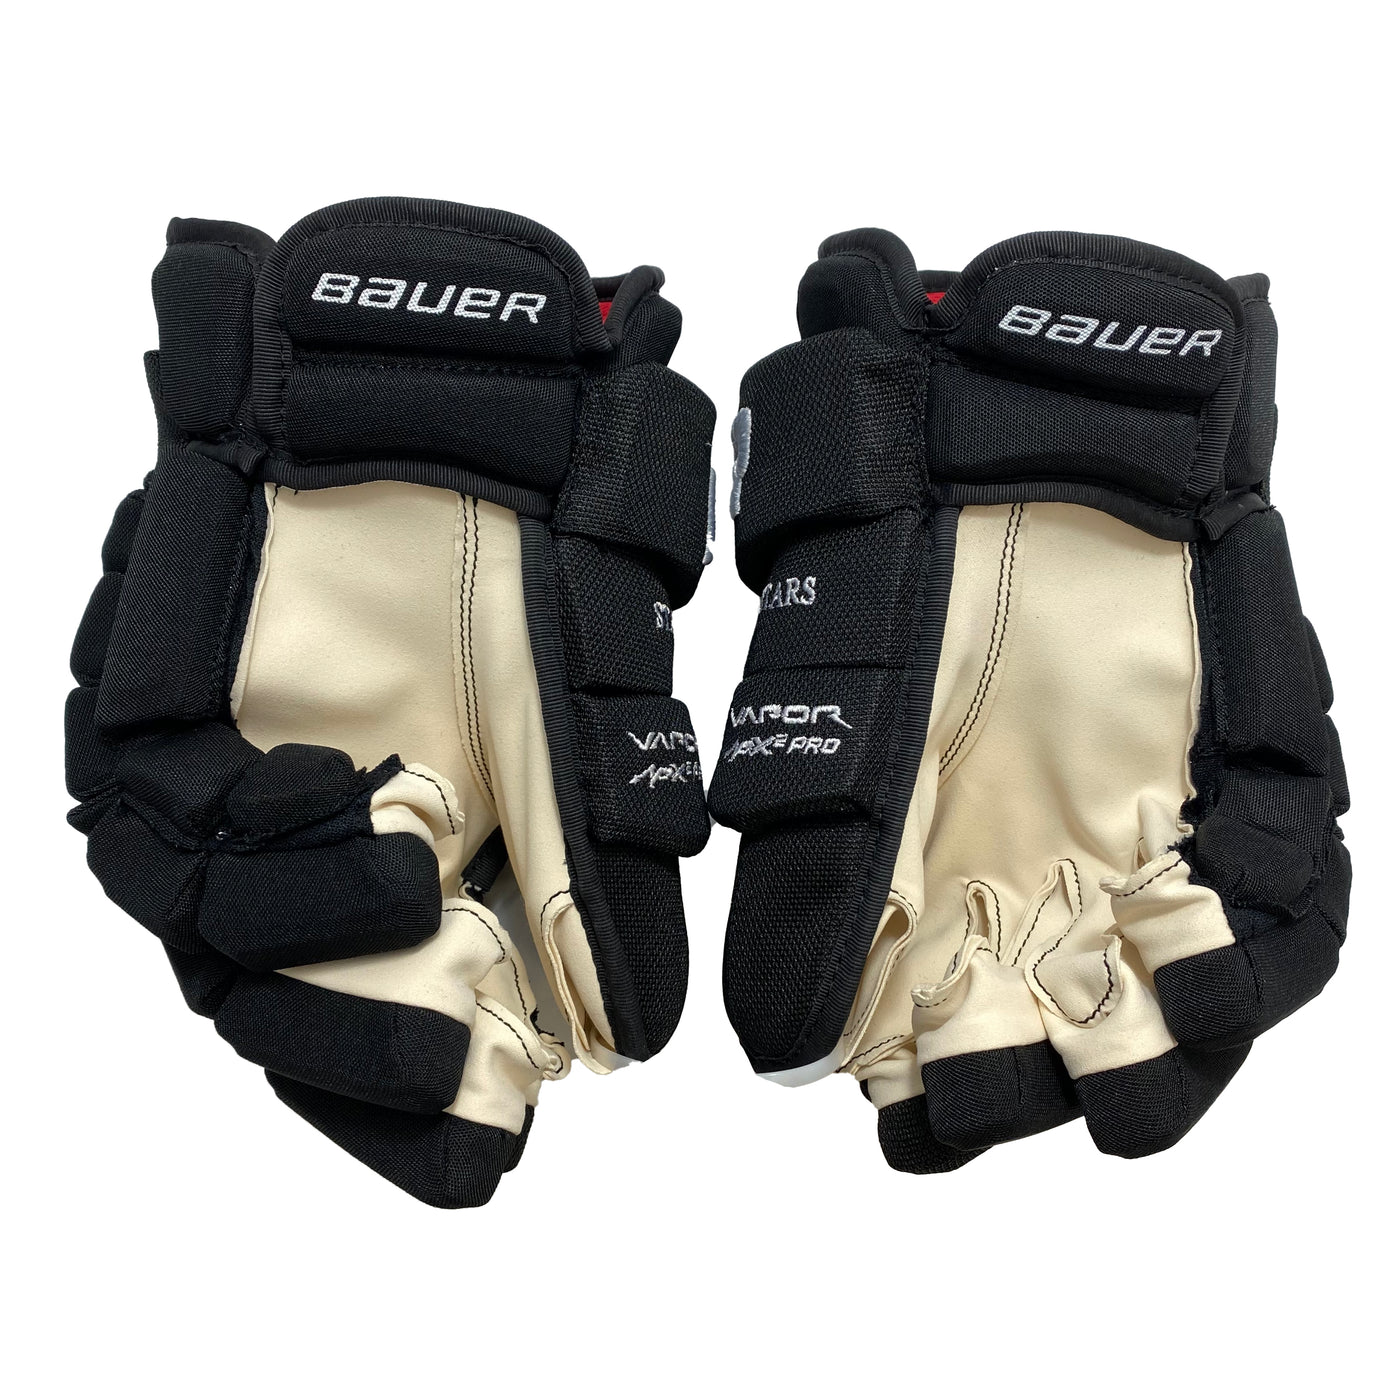 Bauer Vapor APX2 Pro - Dallas Stars - Pro Stock Hockey Gloves - Team Issue